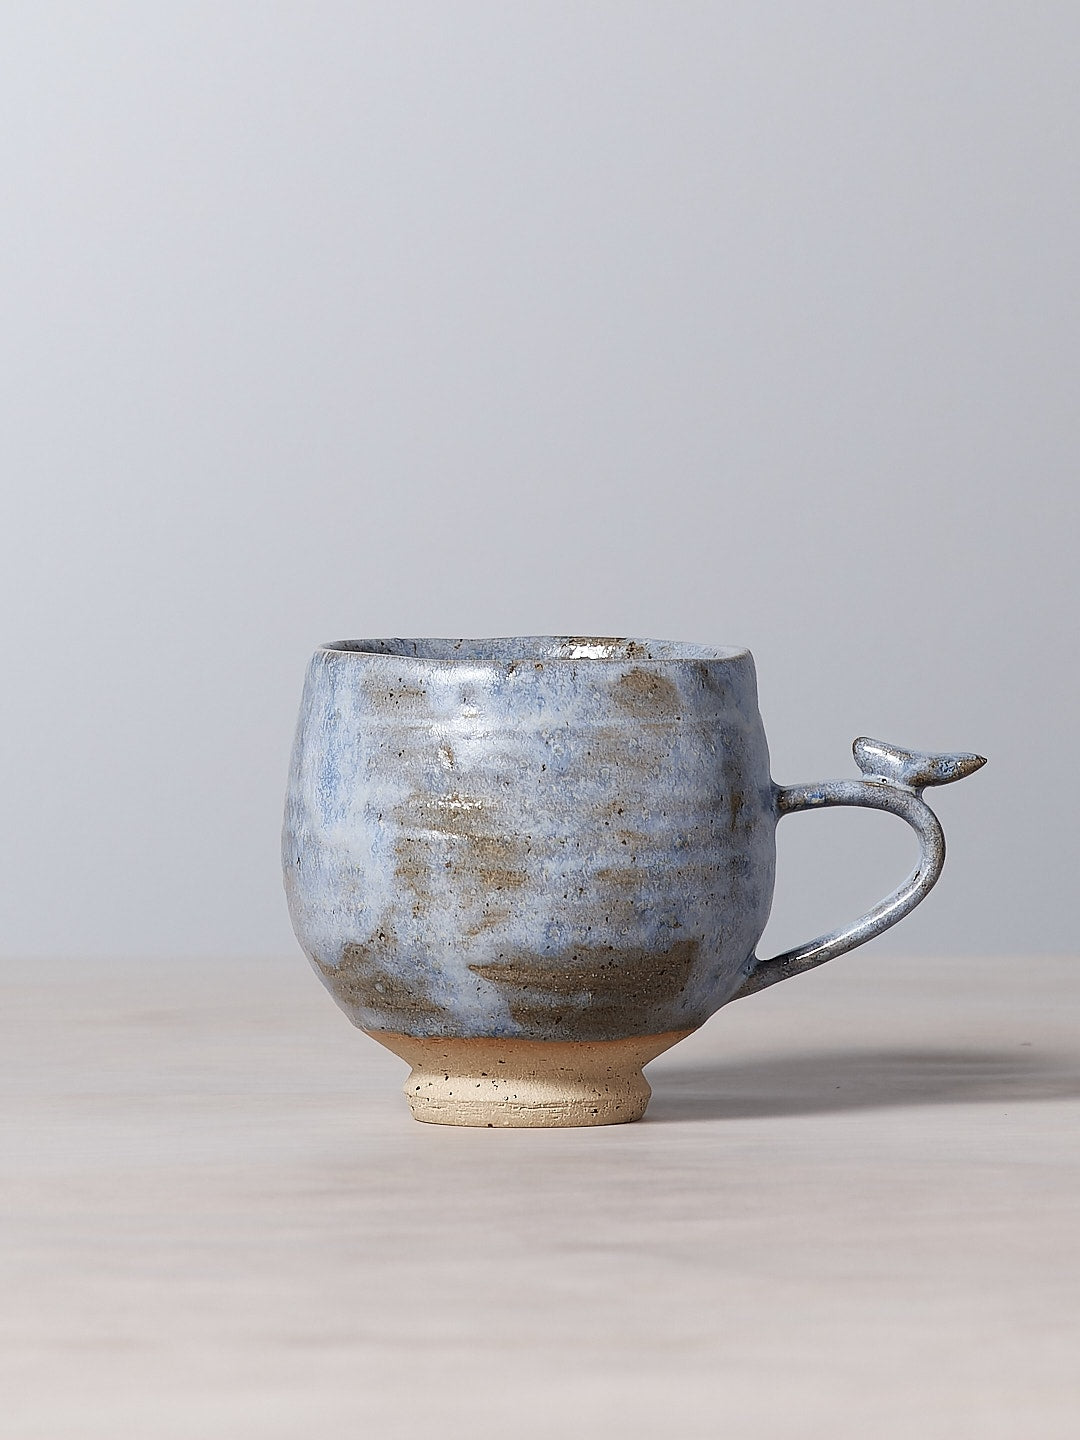 A small handmade blue Bird Handle Cup – Kokako, from Jino Ceramic Studio, sitting on a table.